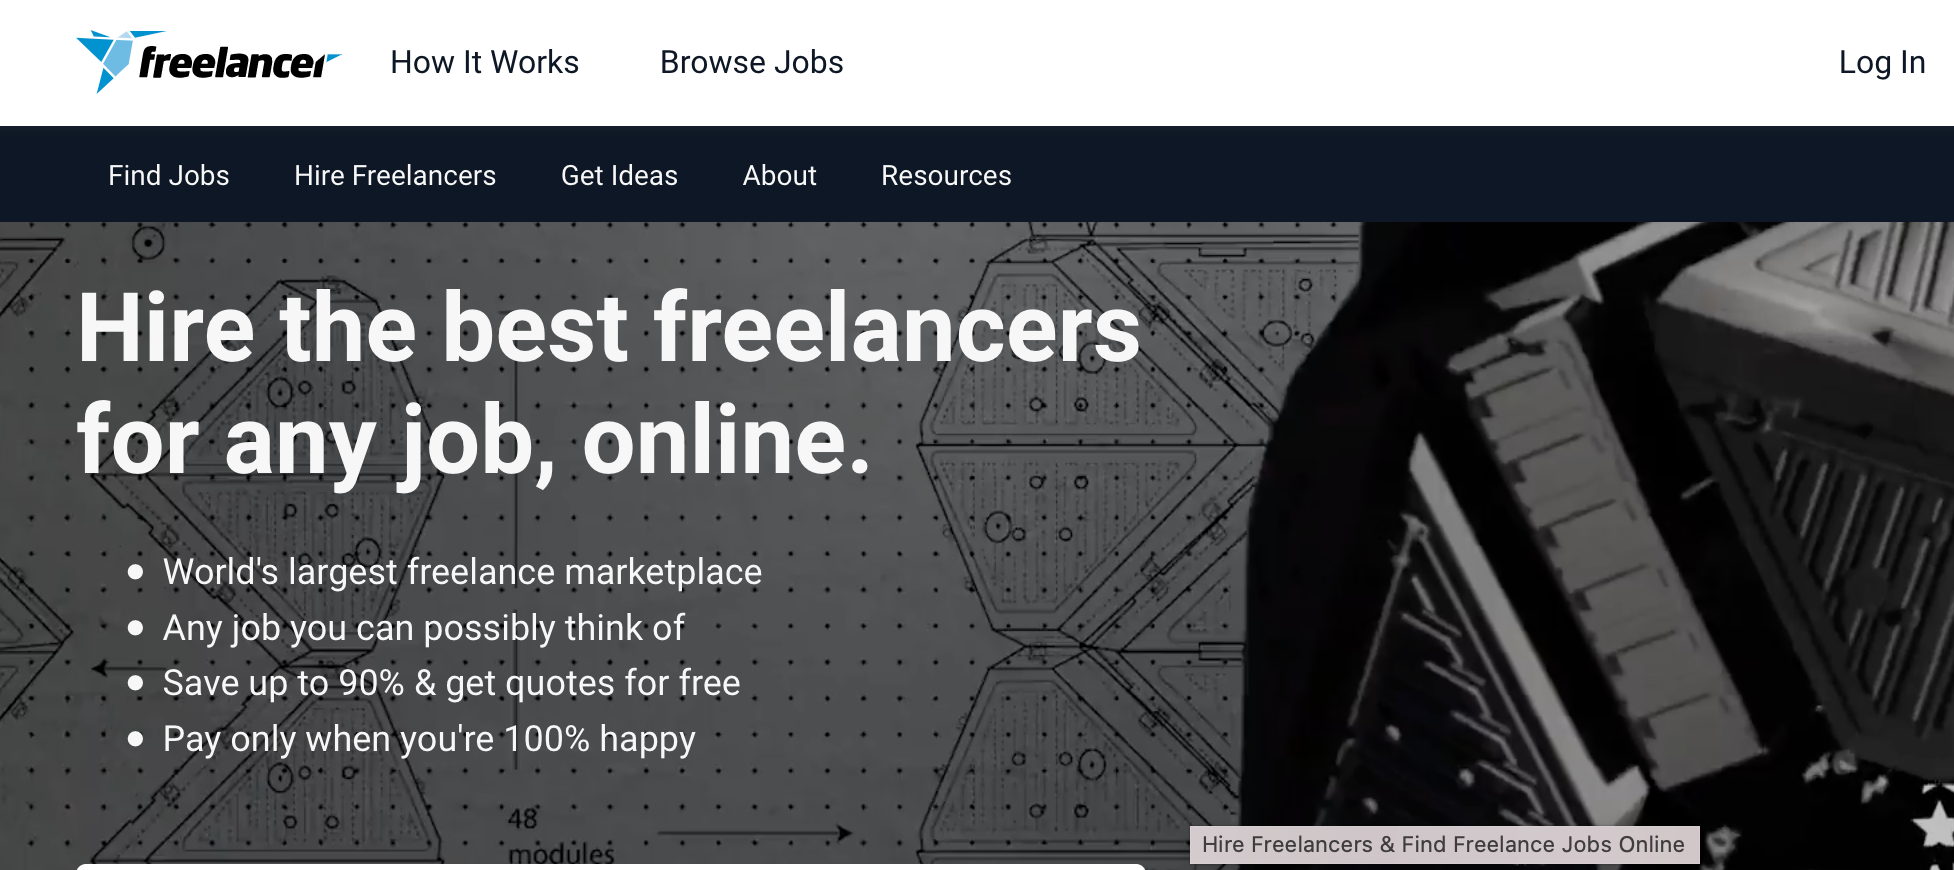 freelance jobs no experience